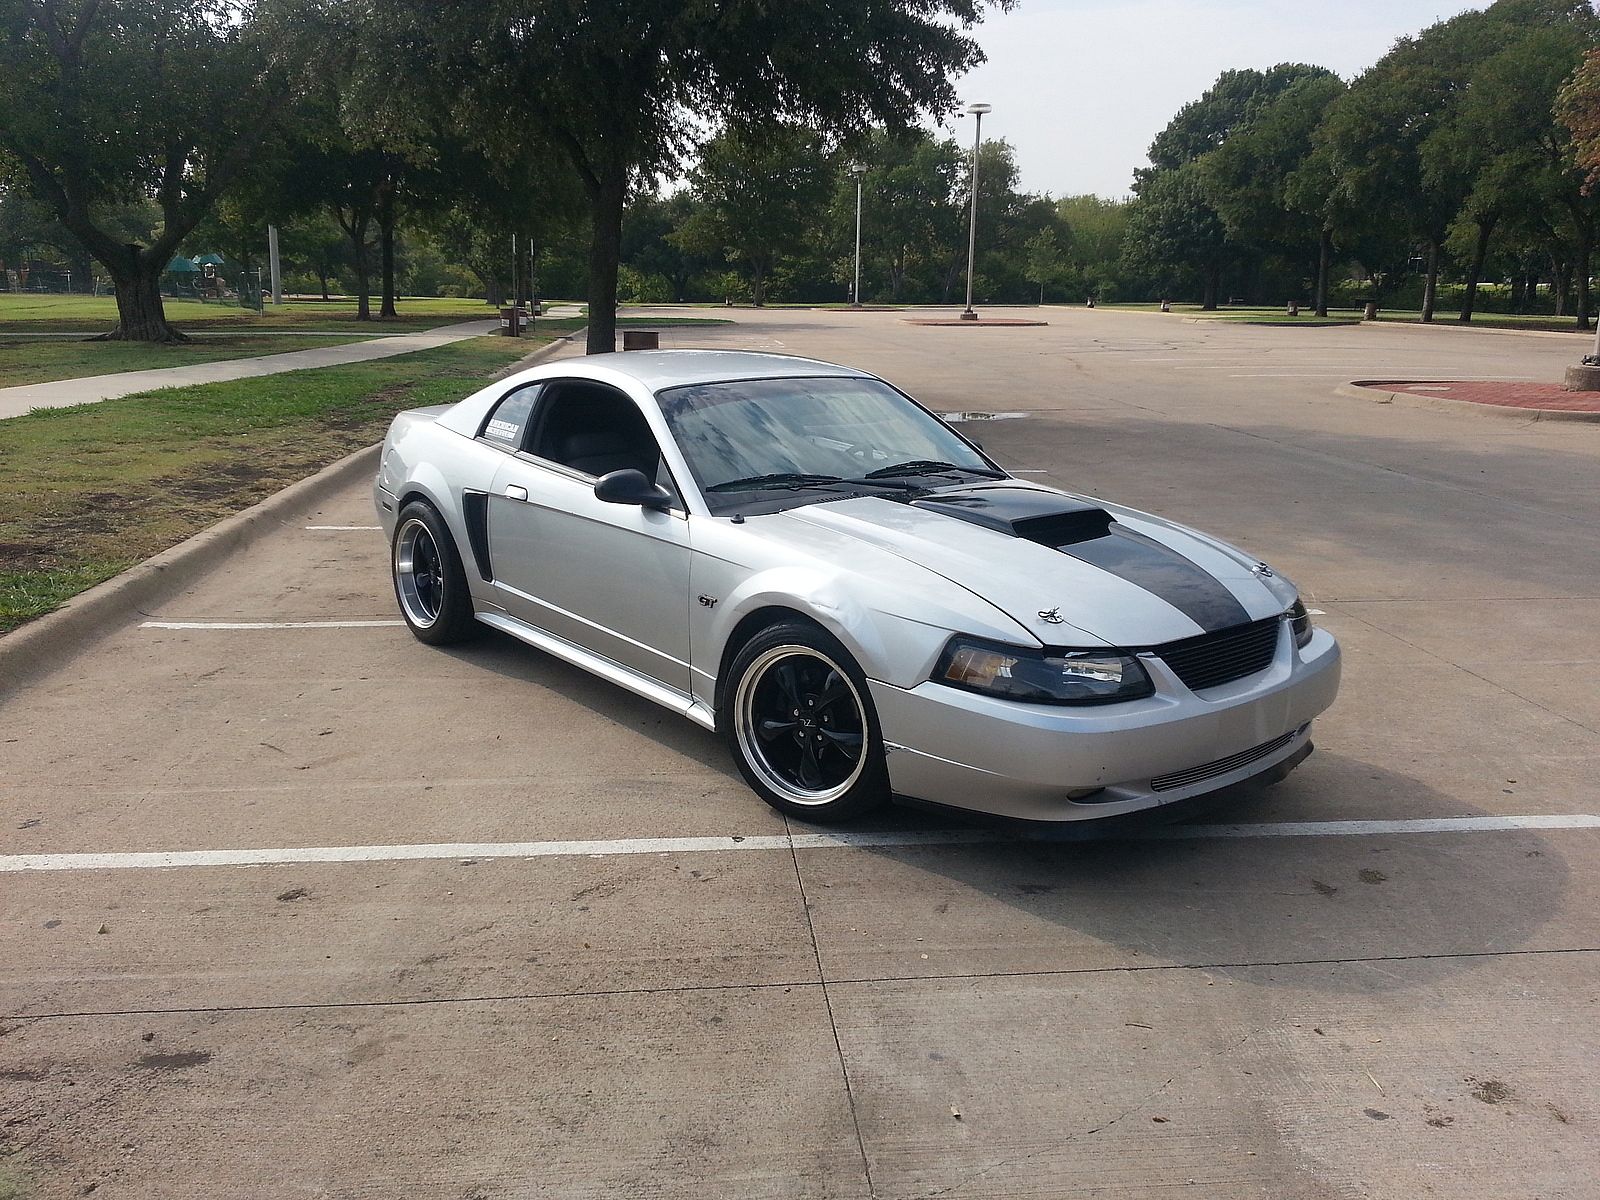 03 Mustang GT @ Heights Park4.jpg